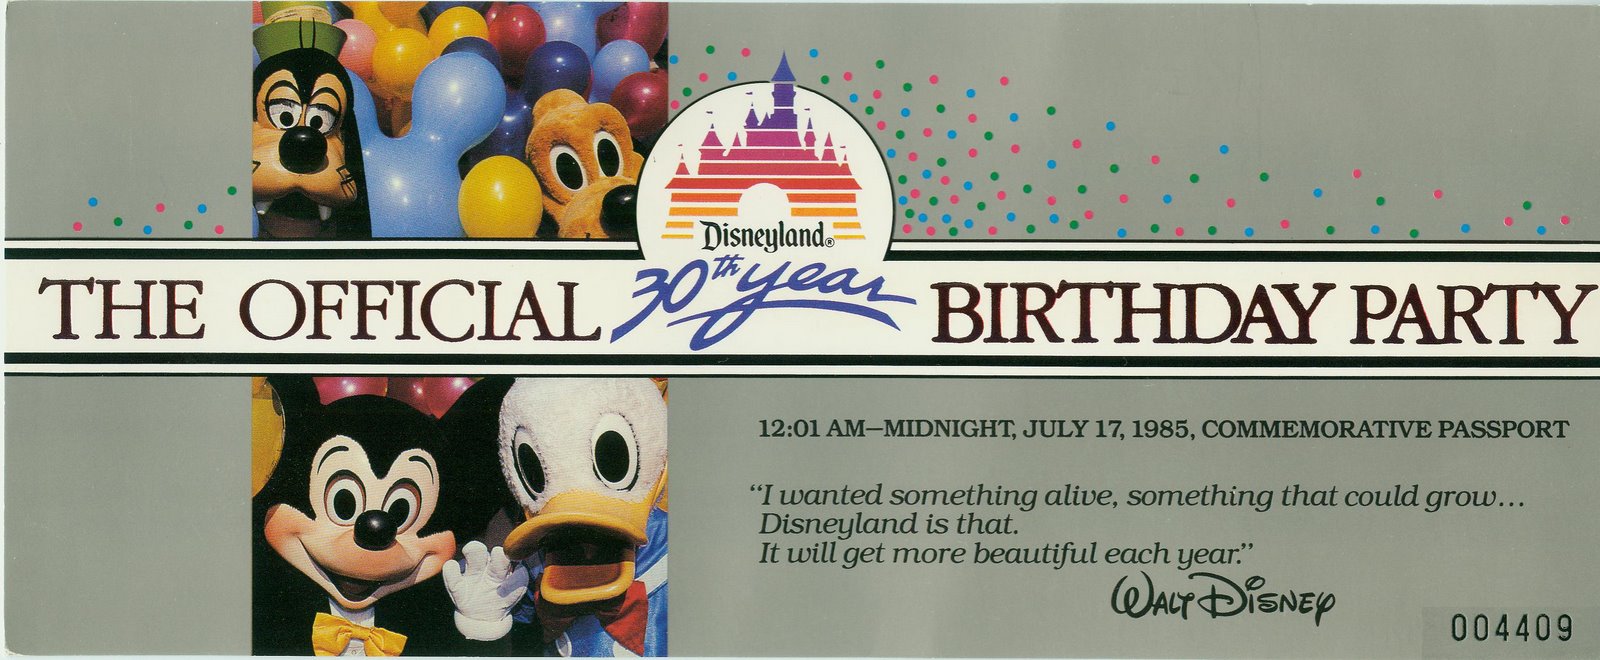 Disneyland 1985 30th anniversary party ticket